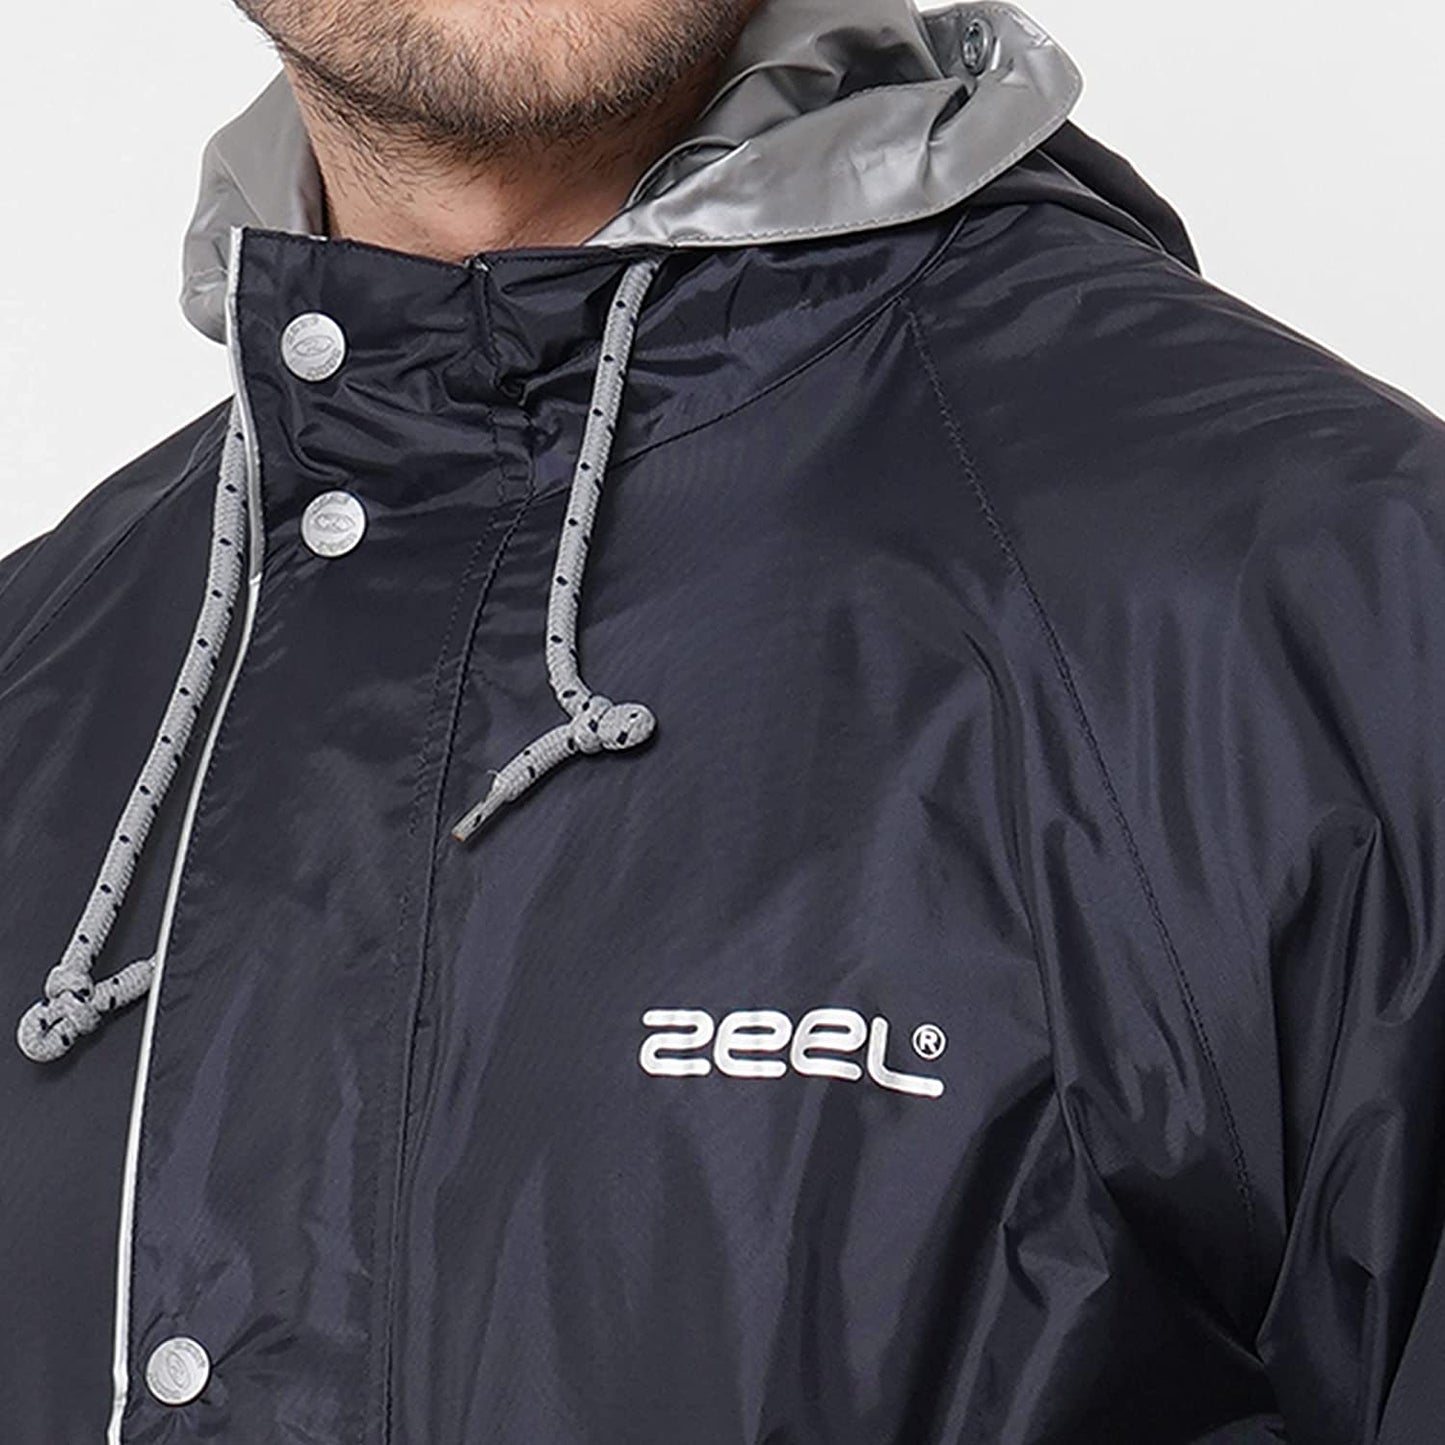 ZEEL Mens Raincoat with Adjustable Hood | Reversible Raincoat for Men | Waterproof Pant and Carrying Pouch | AZ14